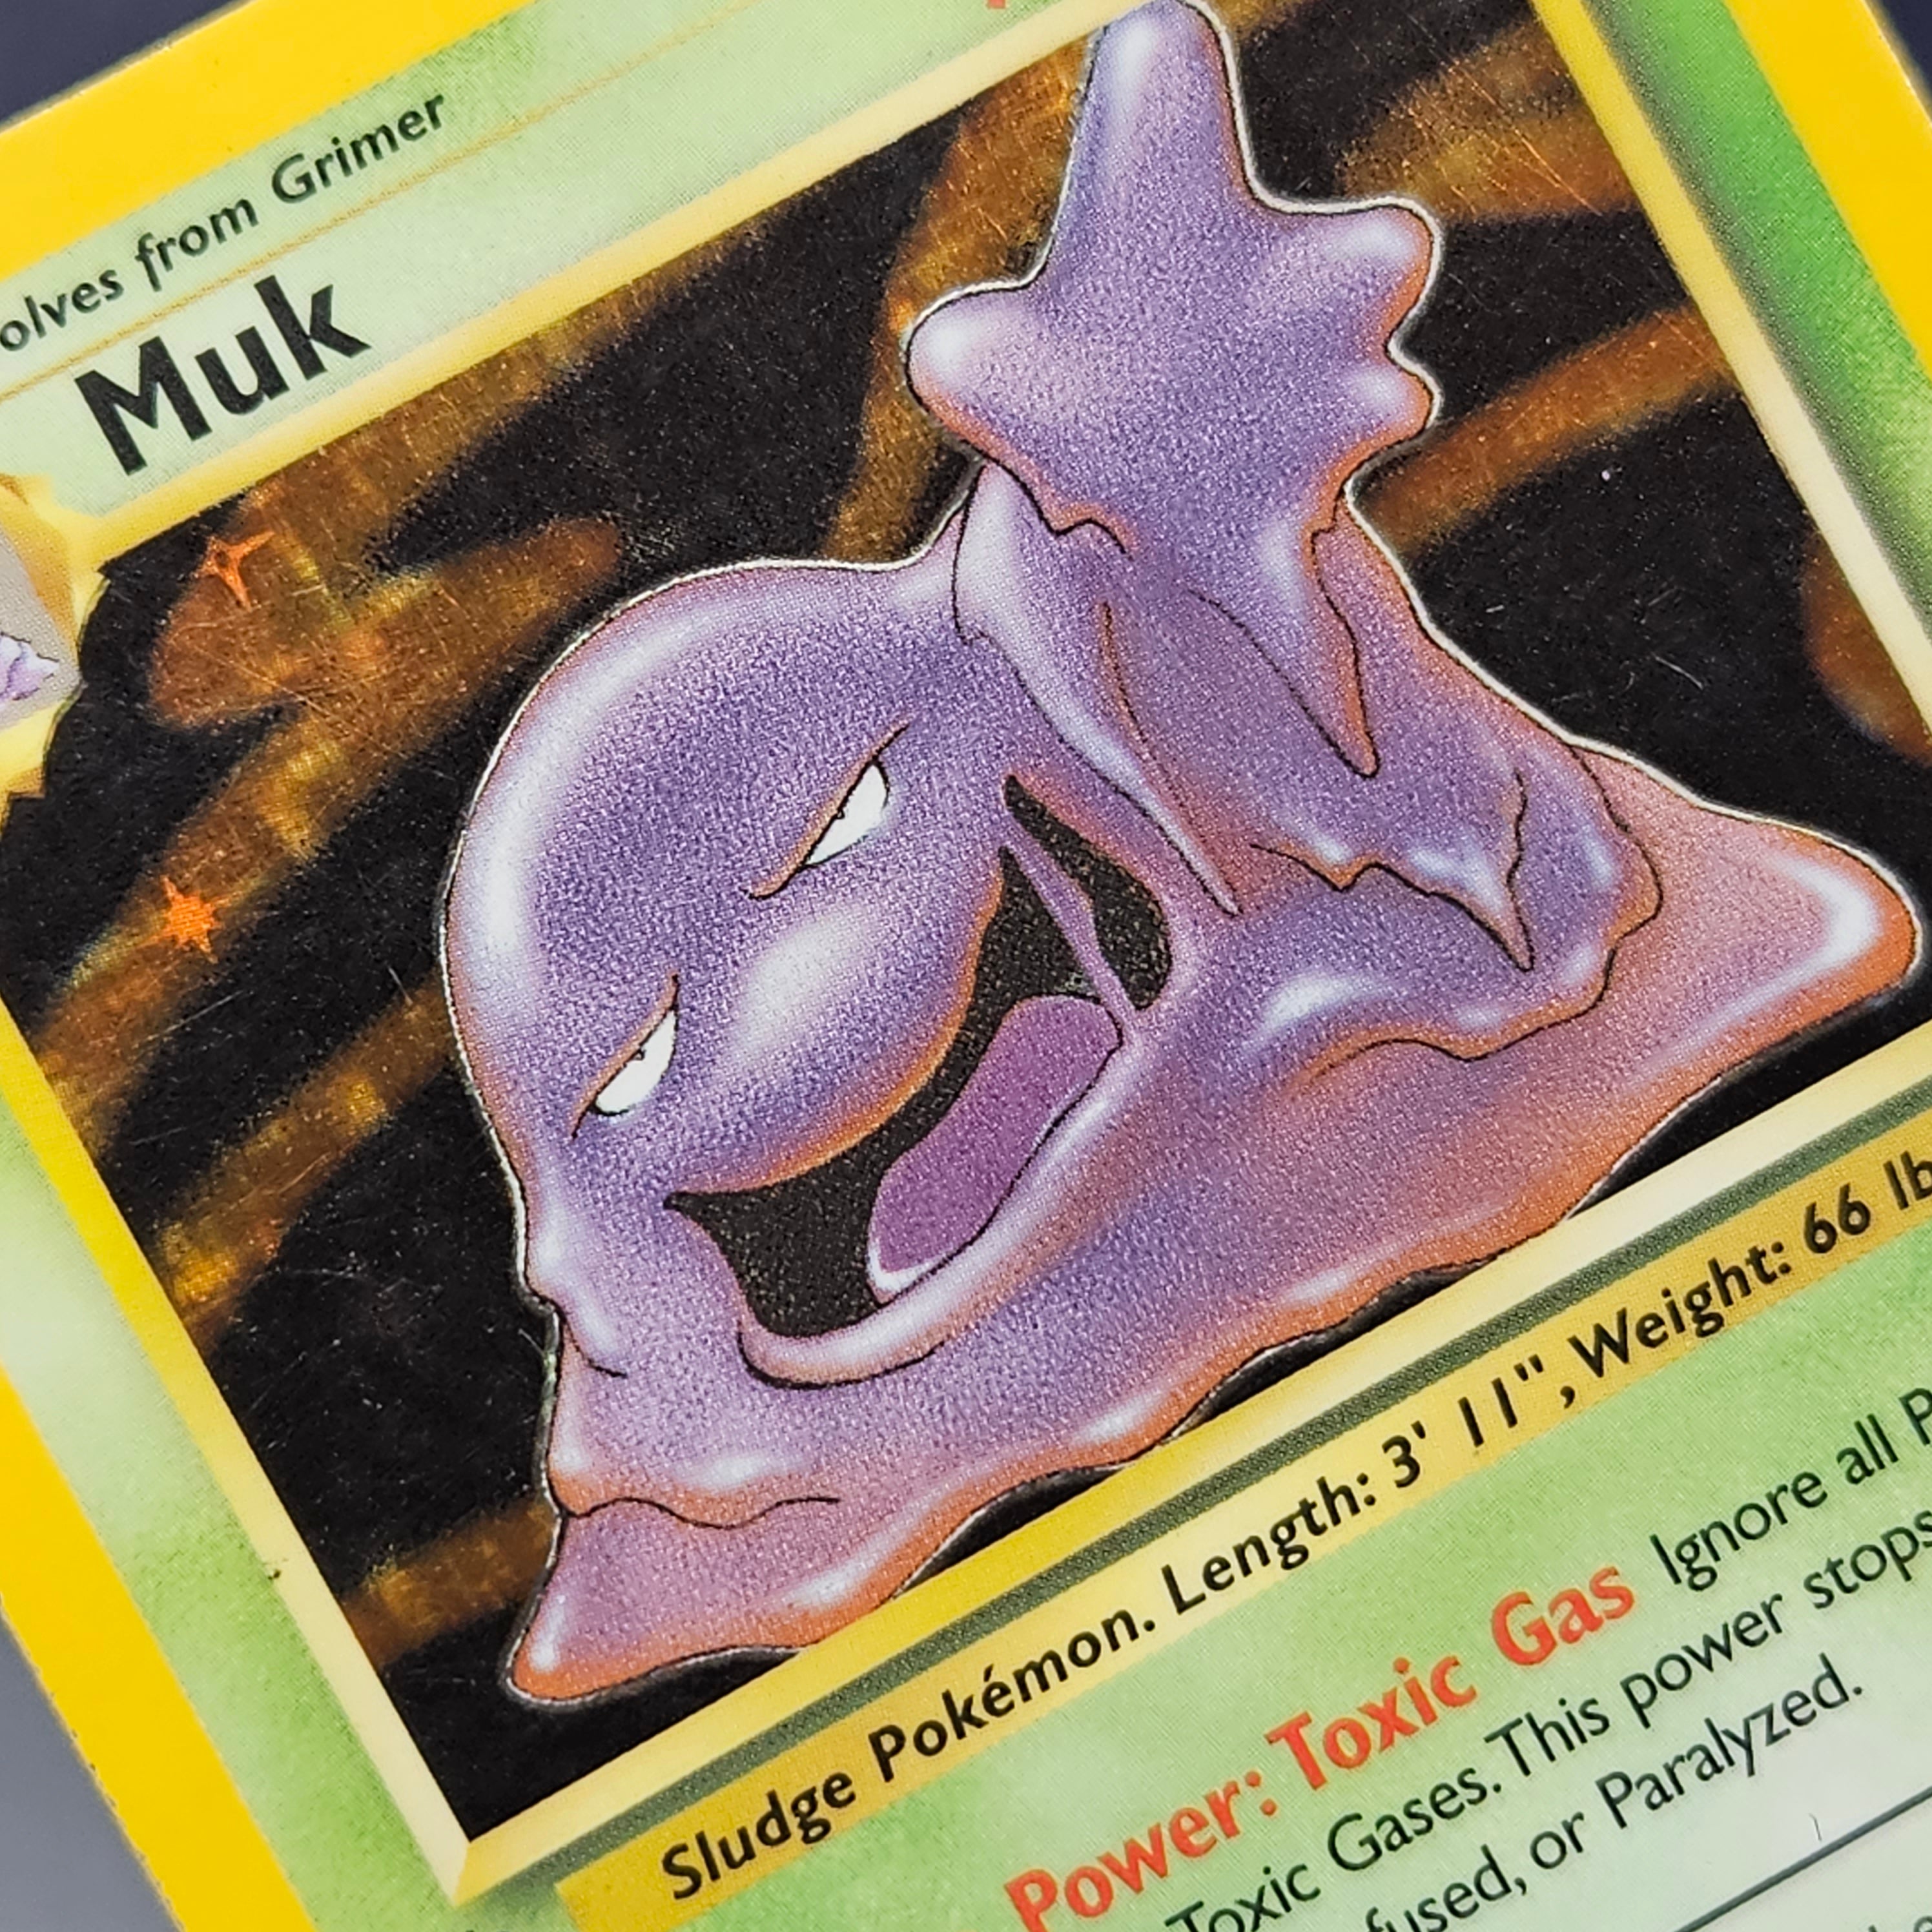 MUK Fossil 1ST EDITION HOLO RARE LP Pokemon Card 13/62